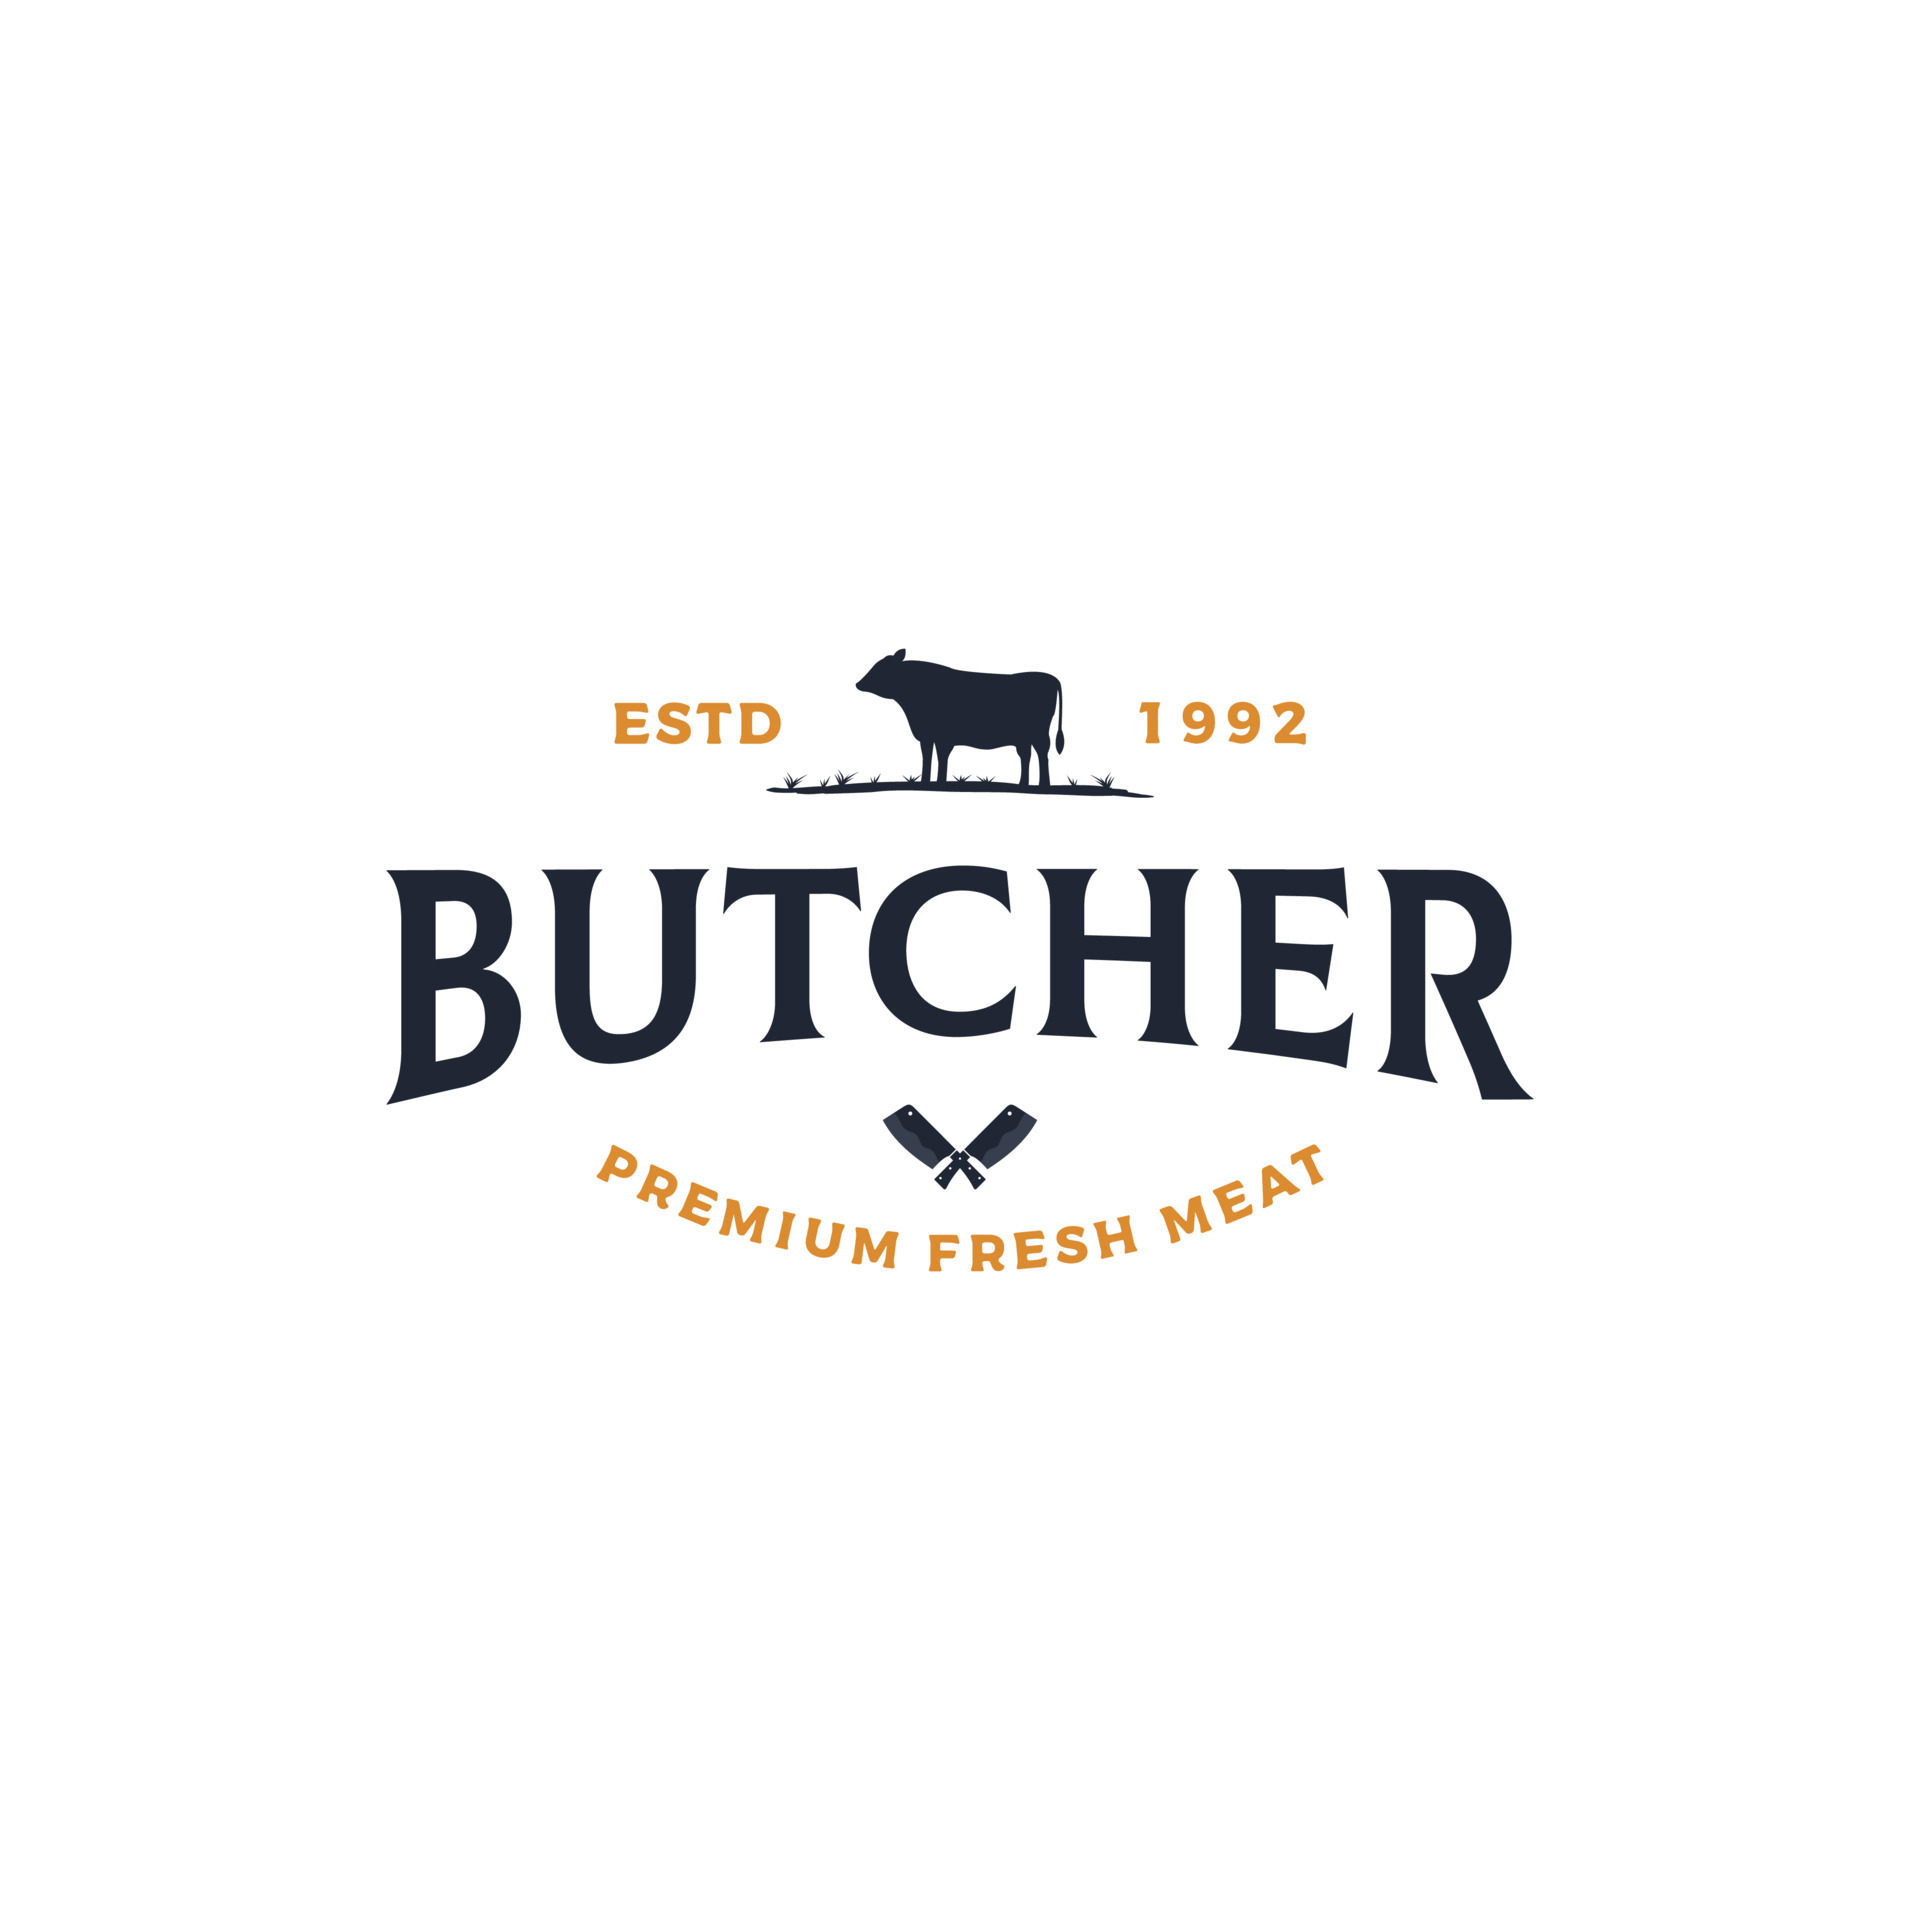 Butchery shop Logo design vector illustration 8152602 Vector Art at ...